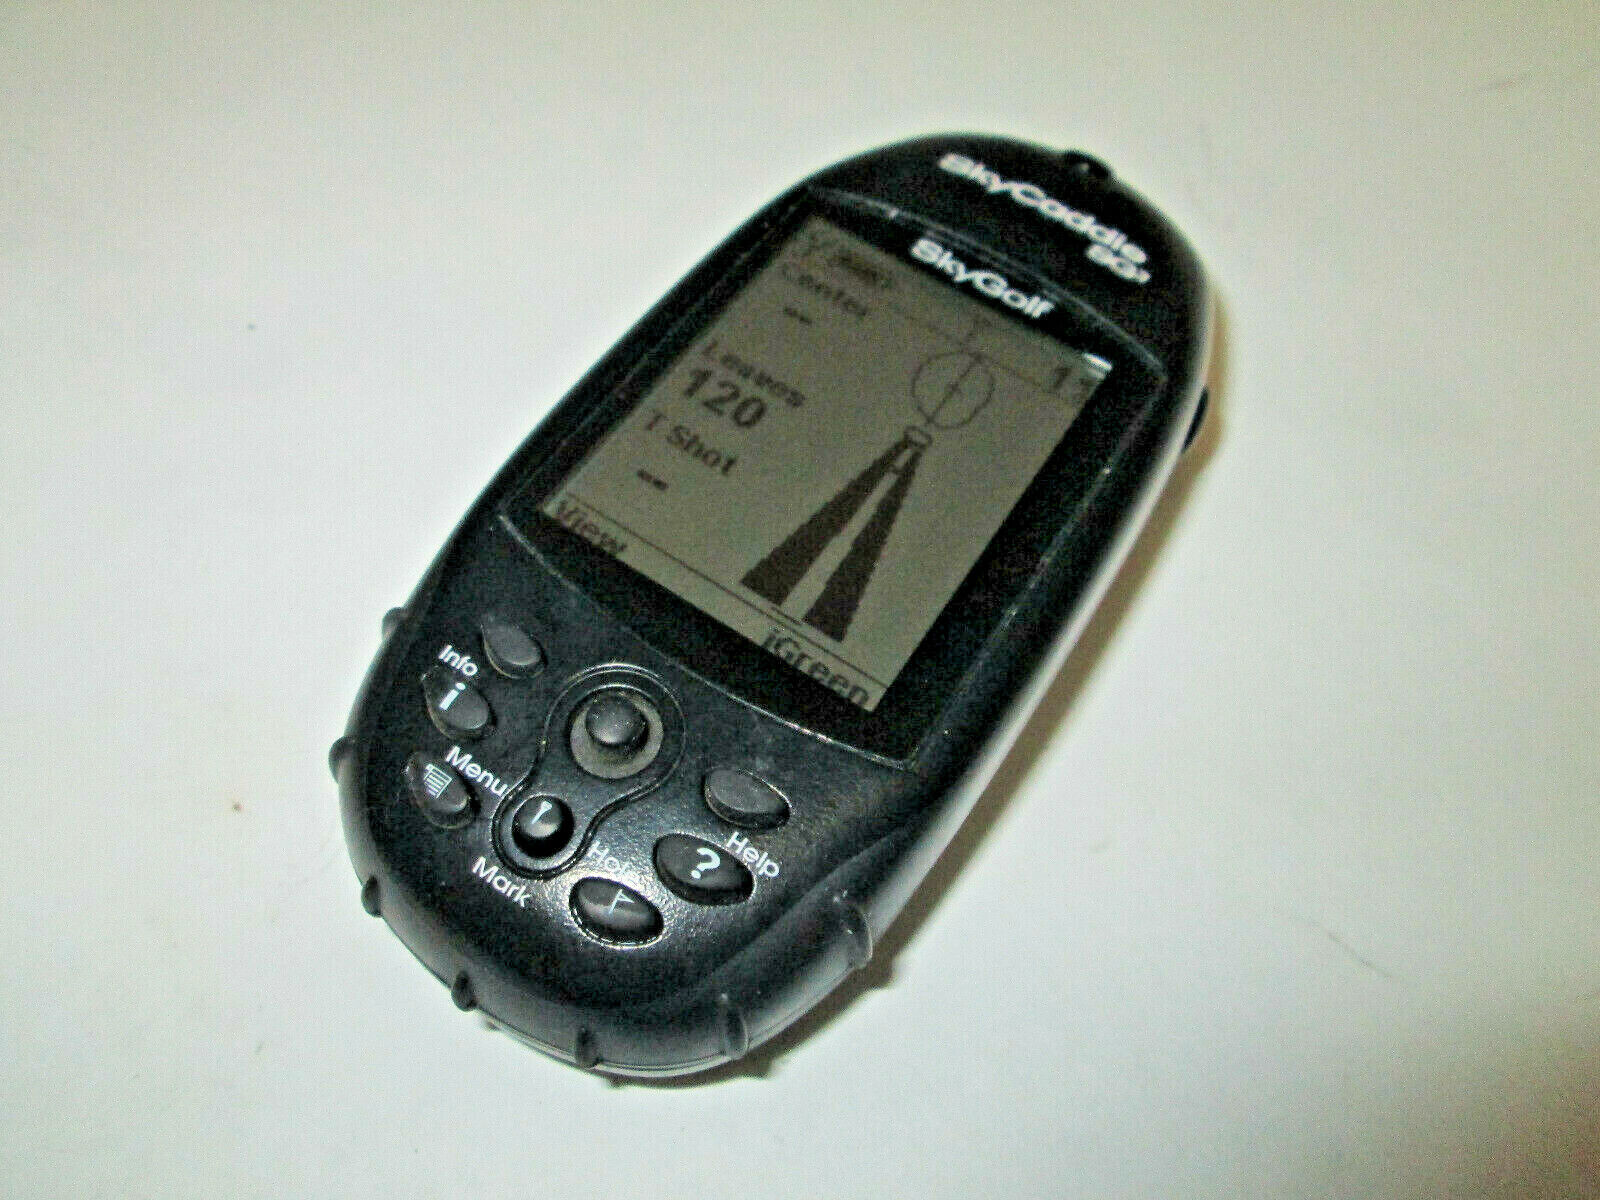 Skycaddie Caddie SG3 Rangefinder Golf GPS Handheld w/USB Cable 